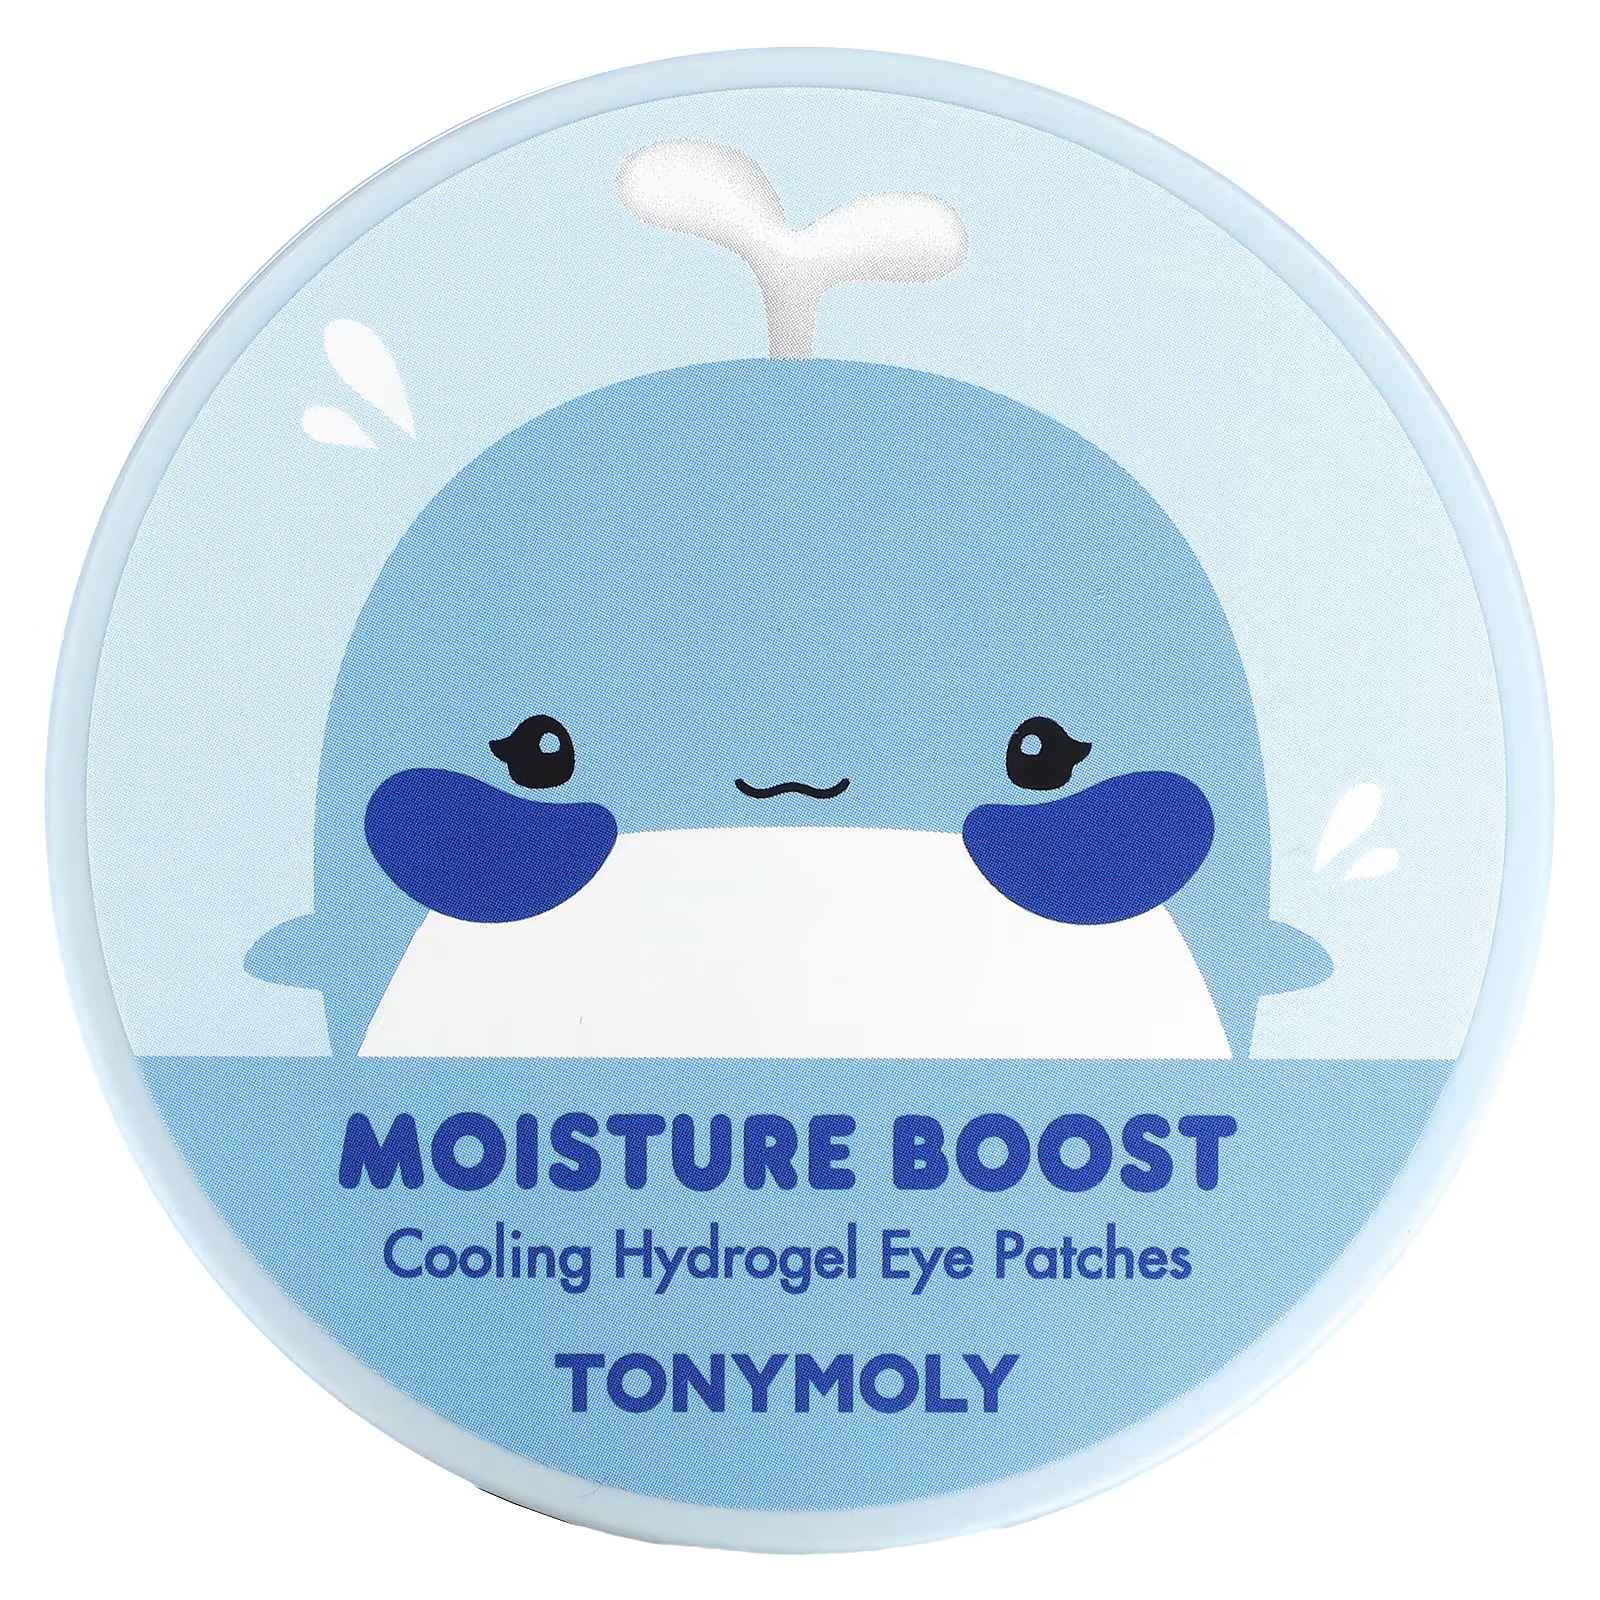 Tony Moly Moisture Boost Cooling Hydrogel Eye Patches 60 патчей 2,96 унции (84 г) tony moly plump kin патчи для глаз с ретинолом 60 патчей 84 г 2 96 унции